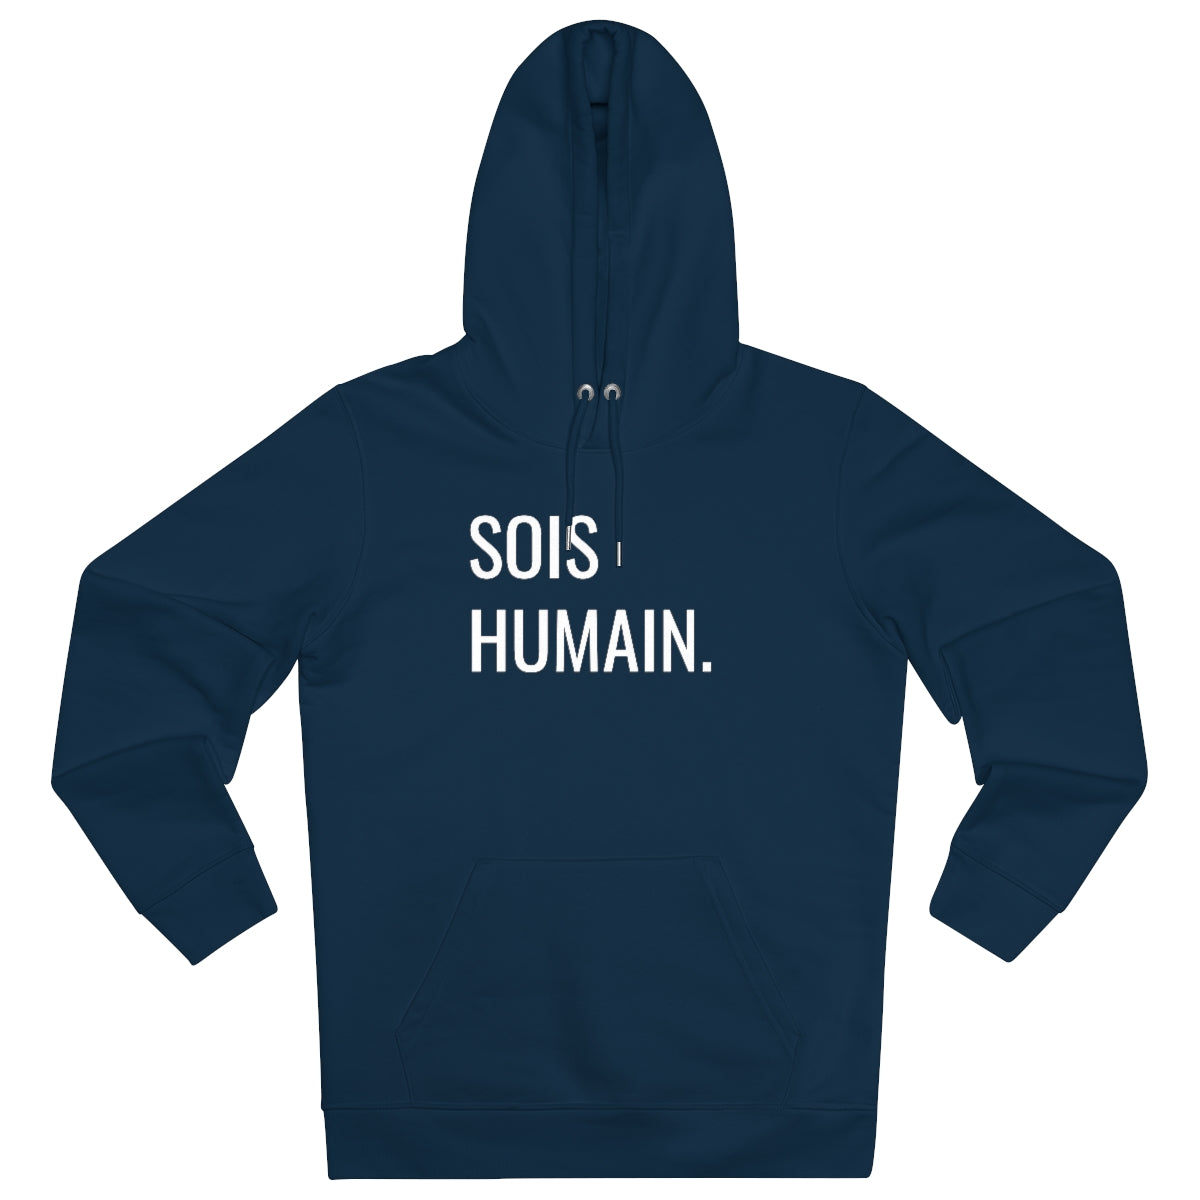 SOIS HUMAIN. - hoodie